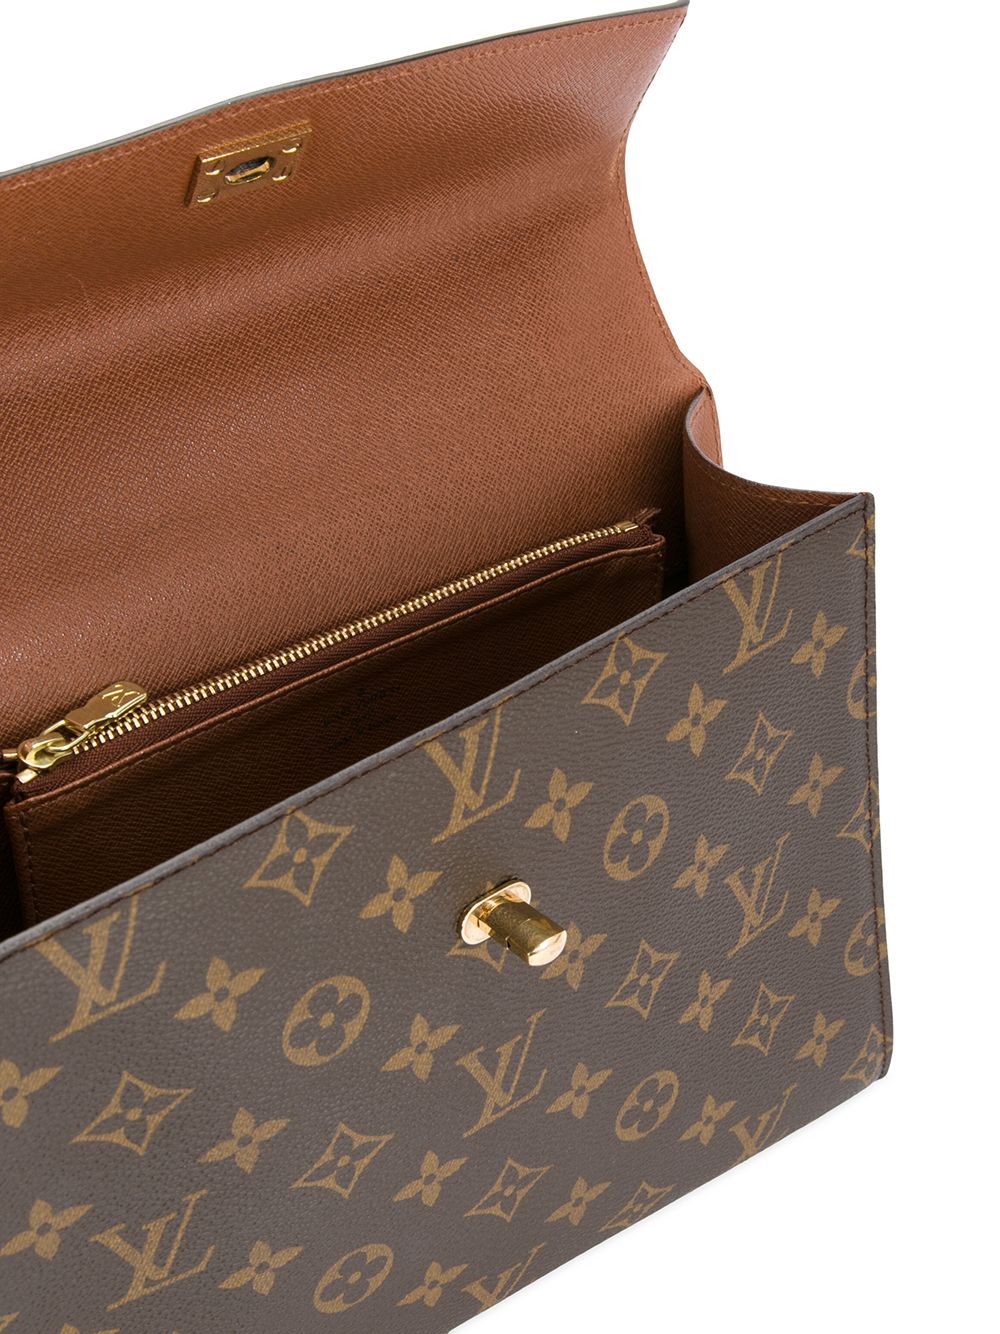 Louis Vuitton Malesherbes Bag - Happyface313